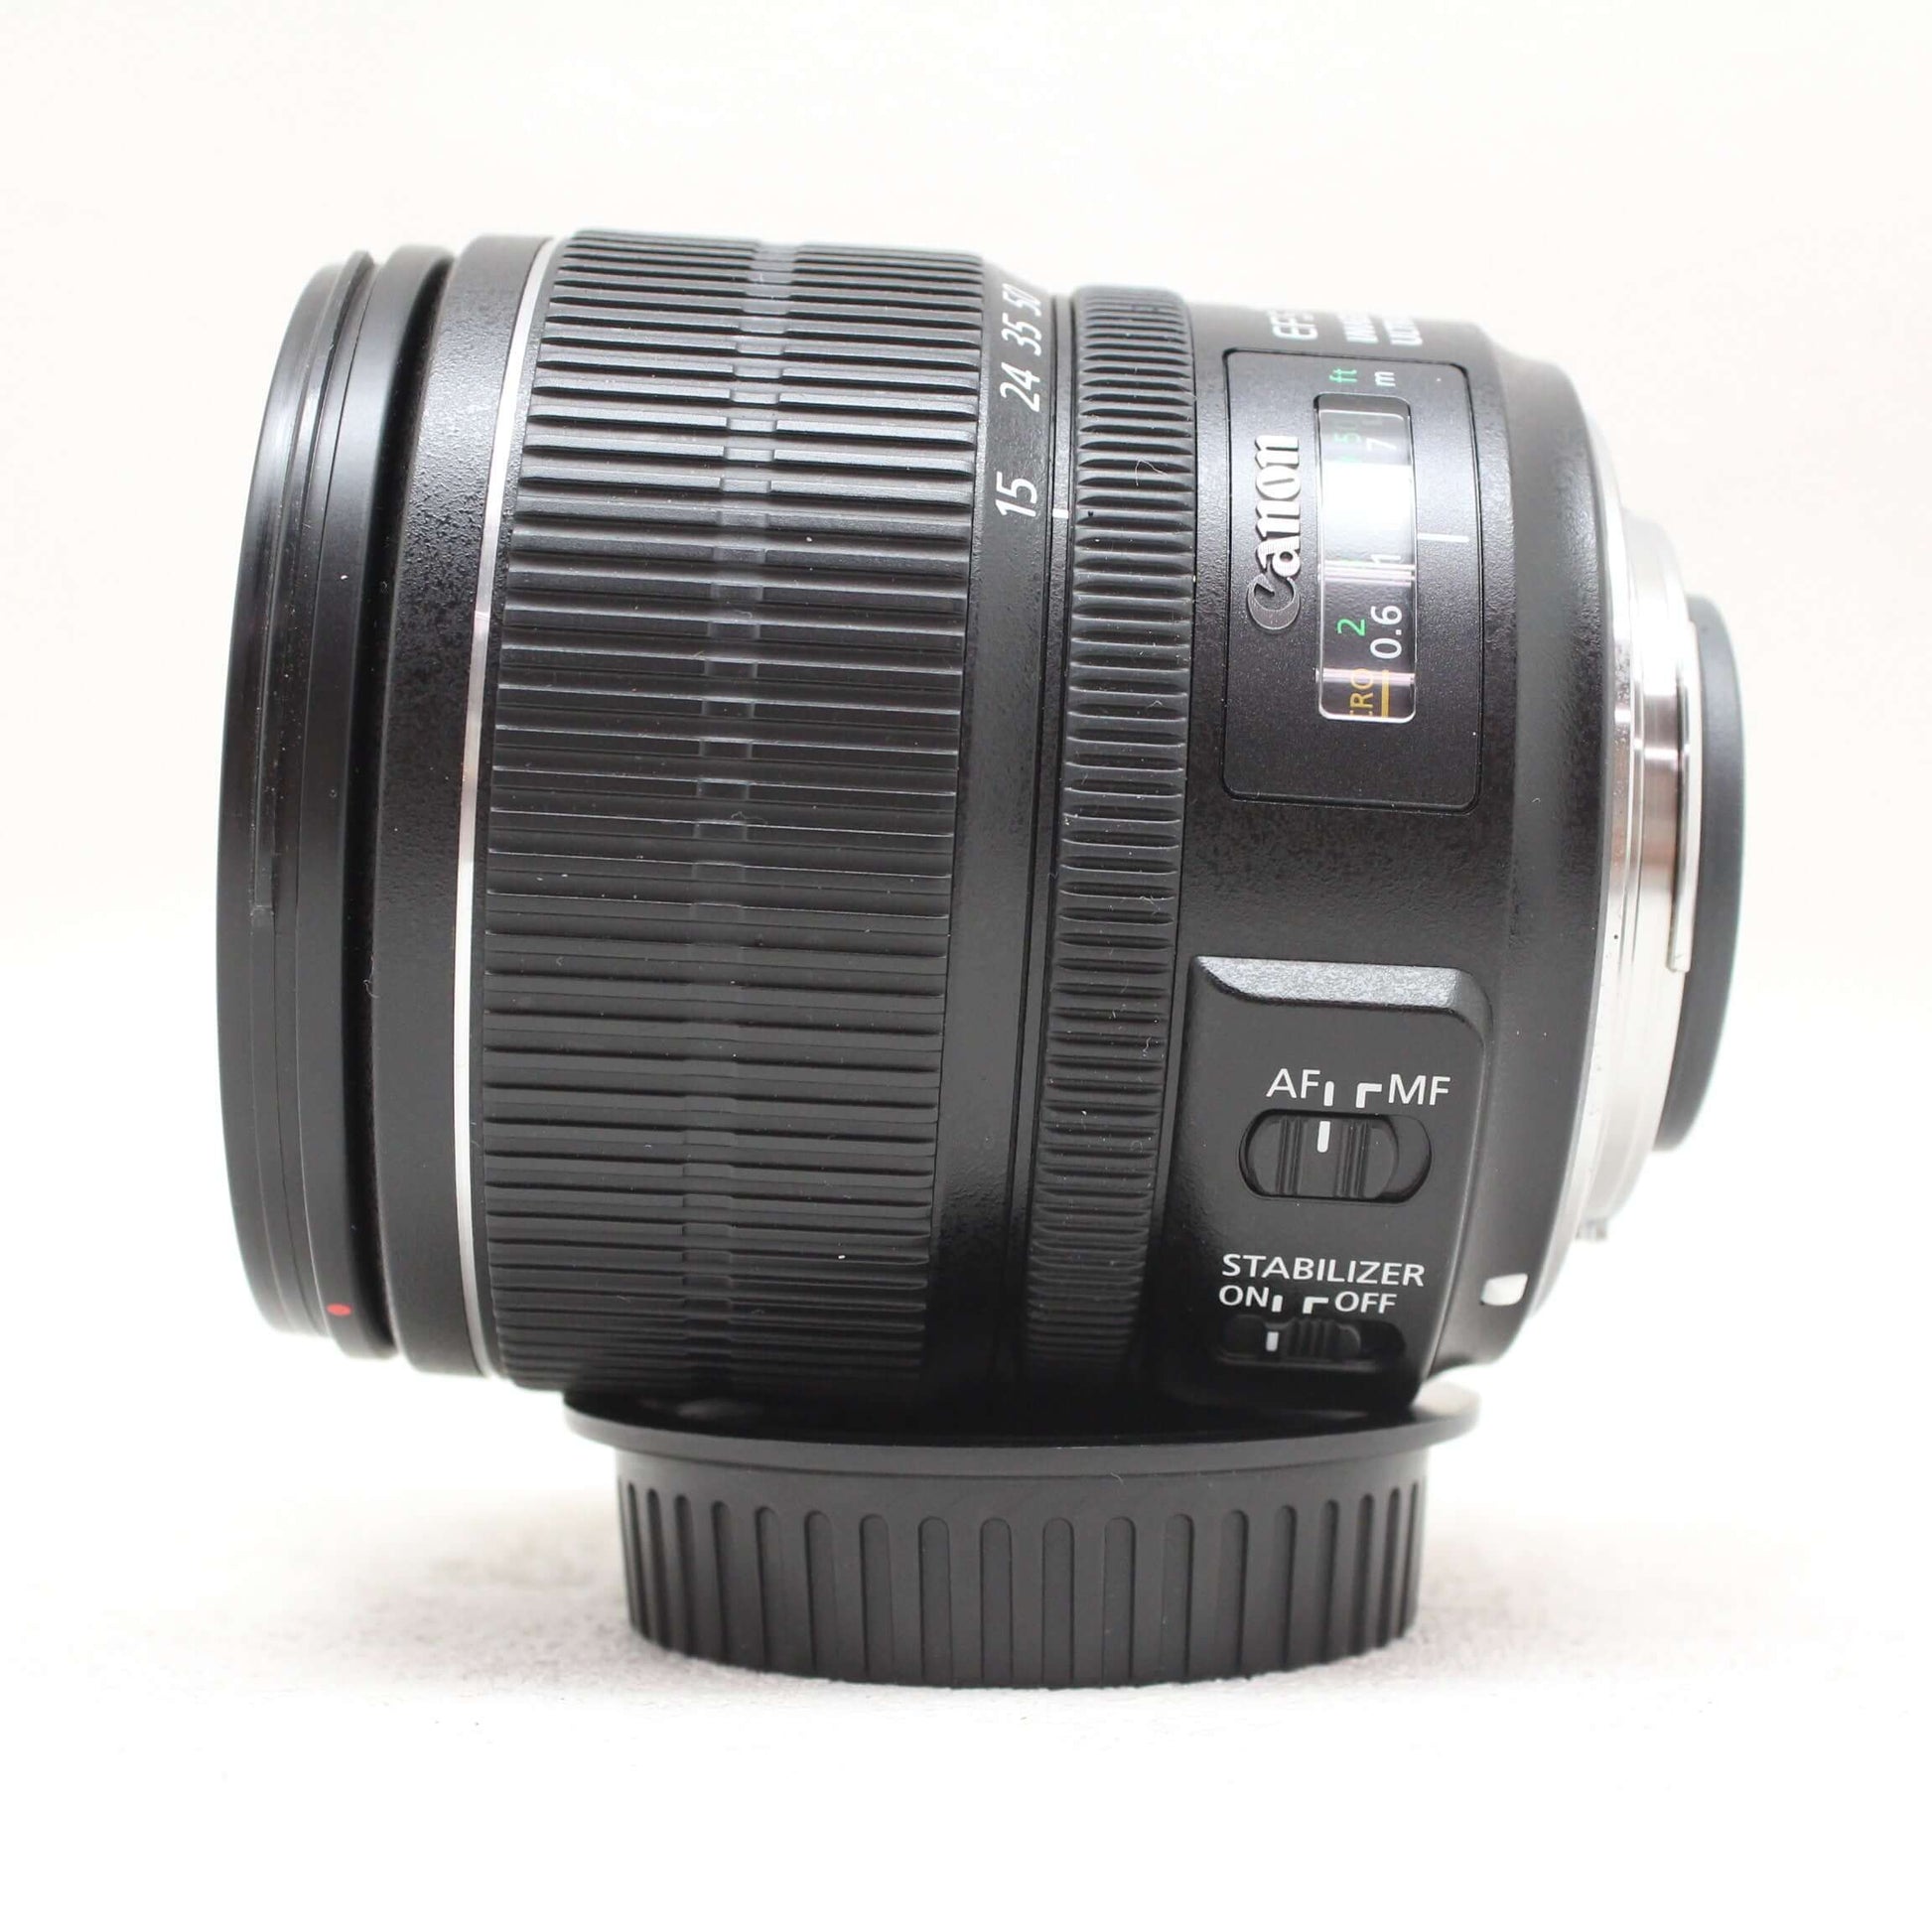 中古品 Canon EF-S 15-85mm F3.5-5.6 IS USM【1月27日(土) youtube生配信でご紹介】